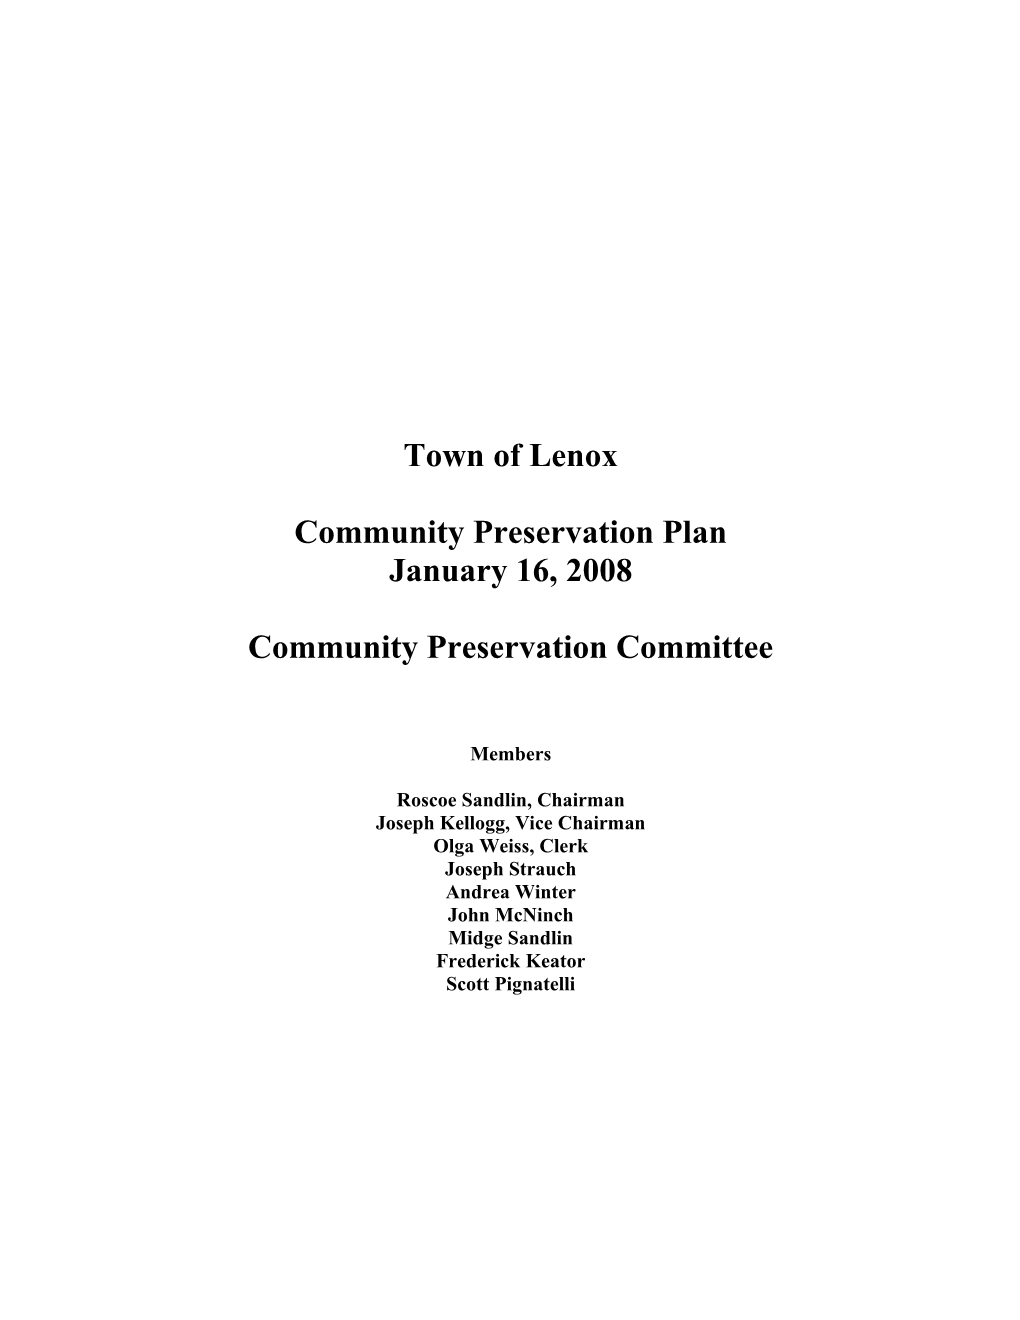 Community Preservation Plan